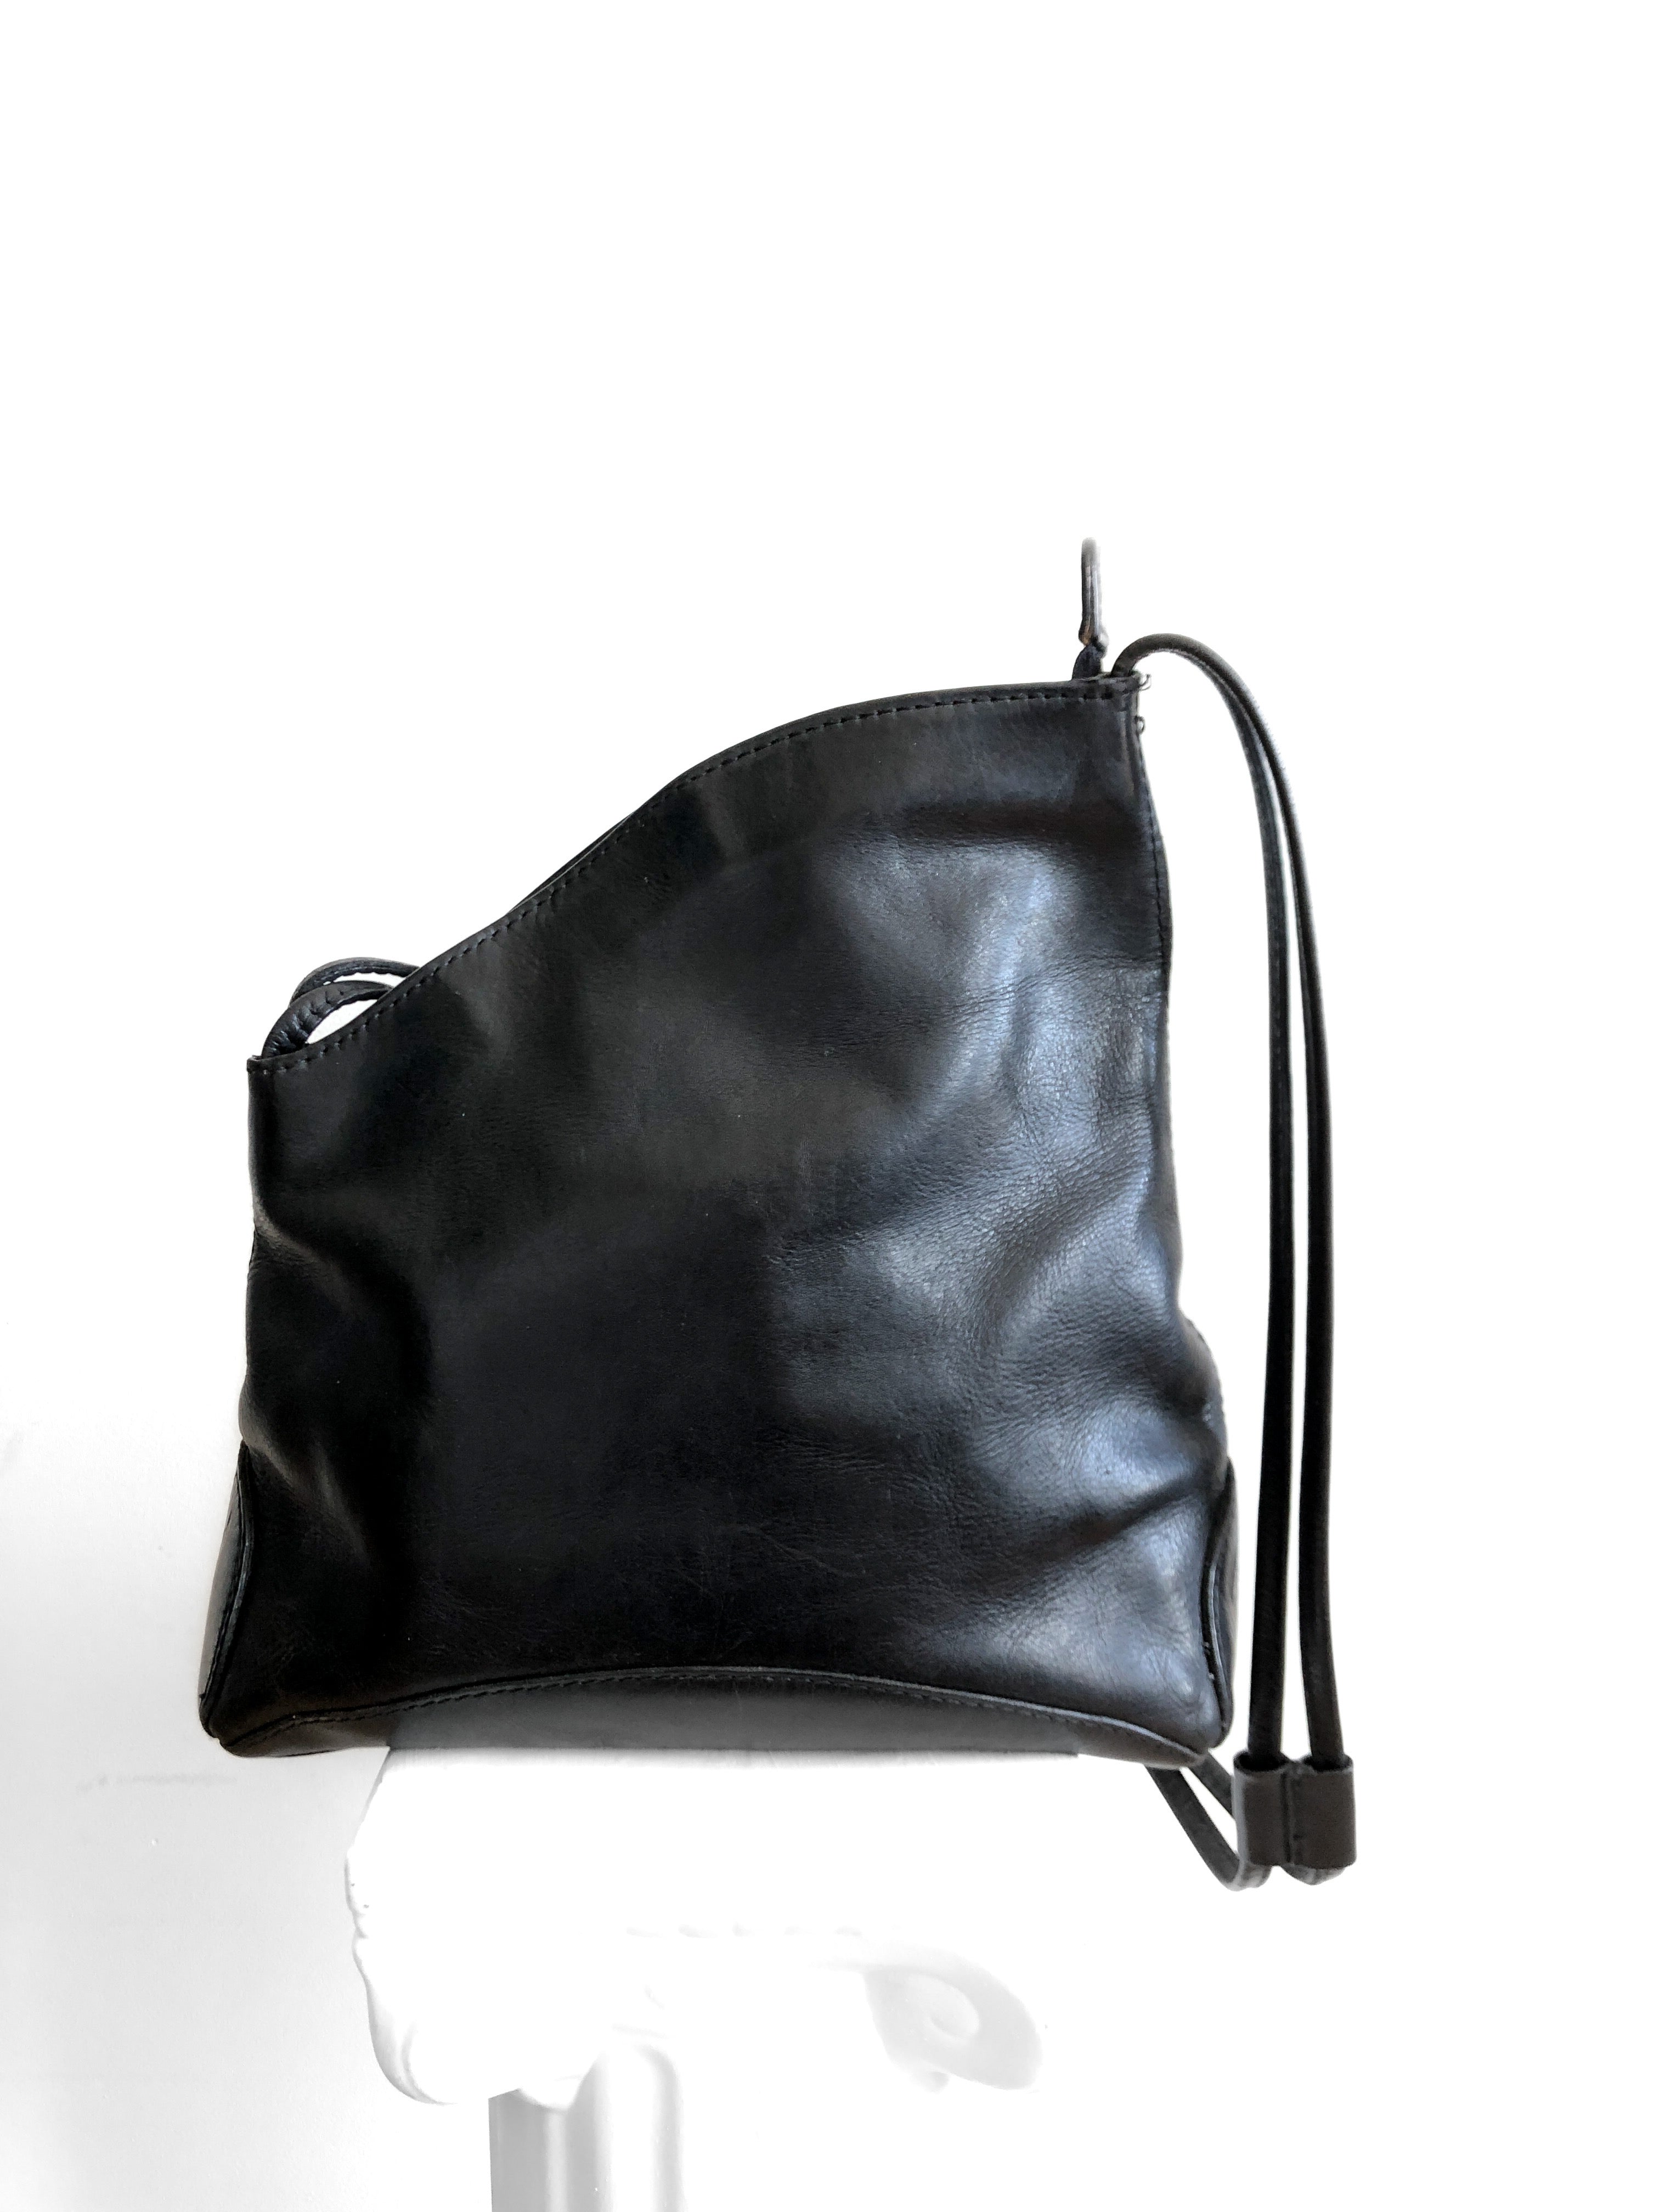 The Wristlet Italian Leather Bag